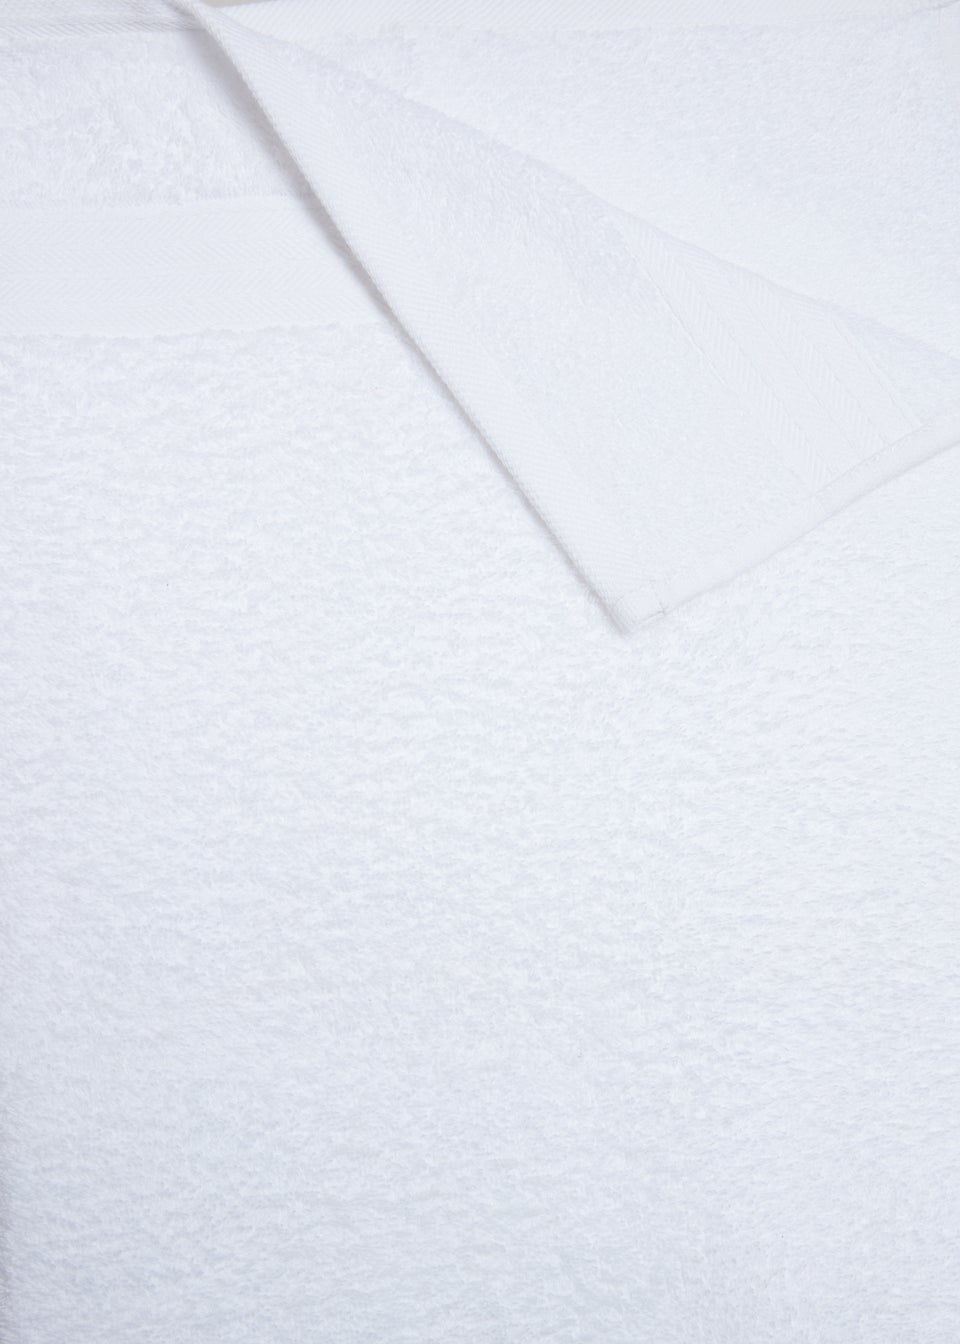 White 100% Cotton Towels